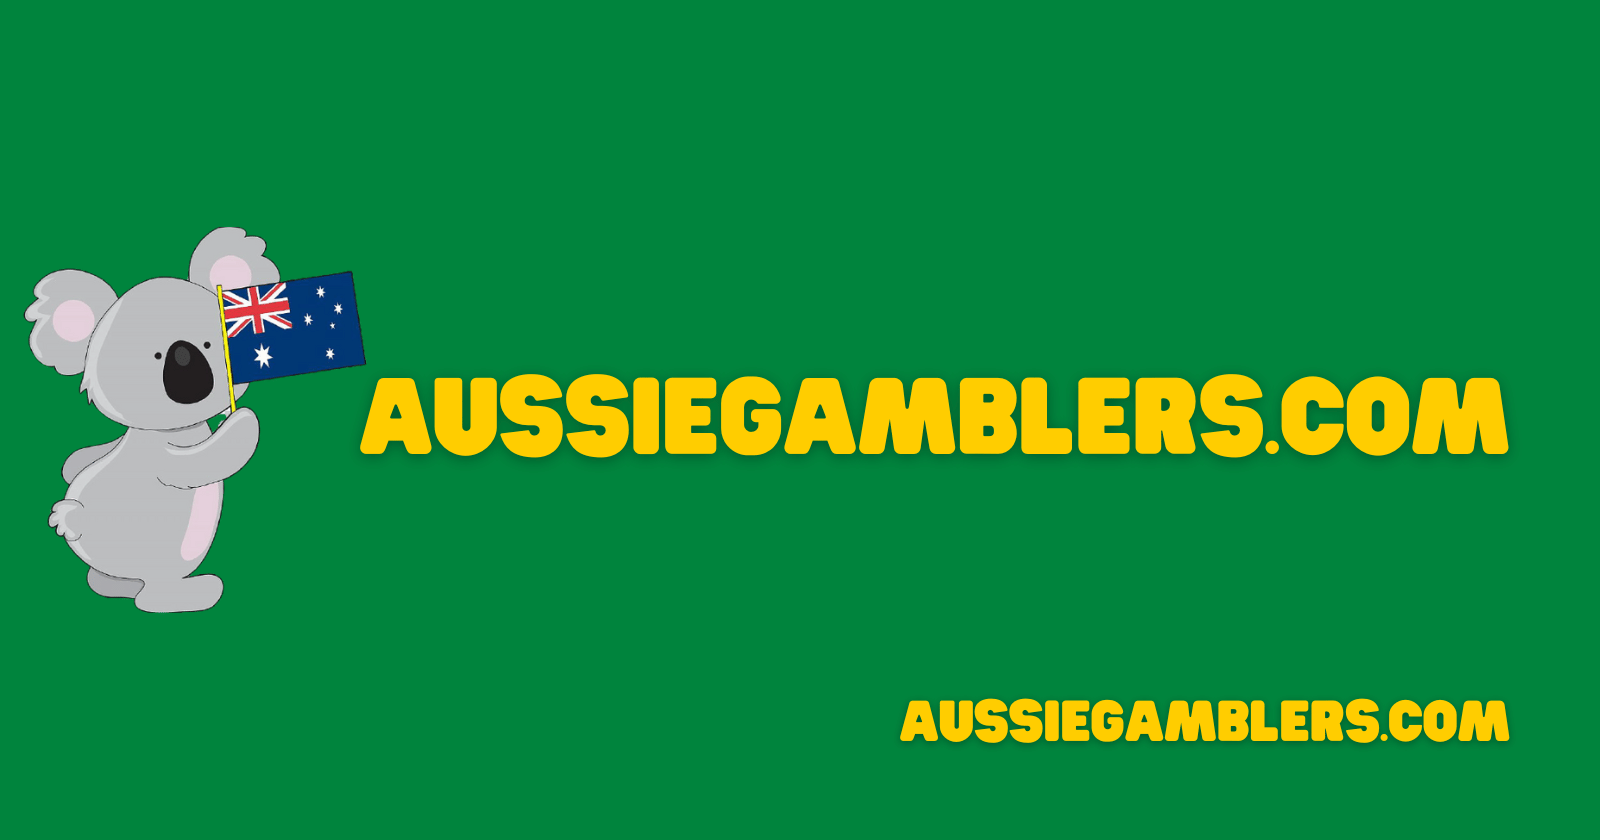 AussieGablers.com Banner